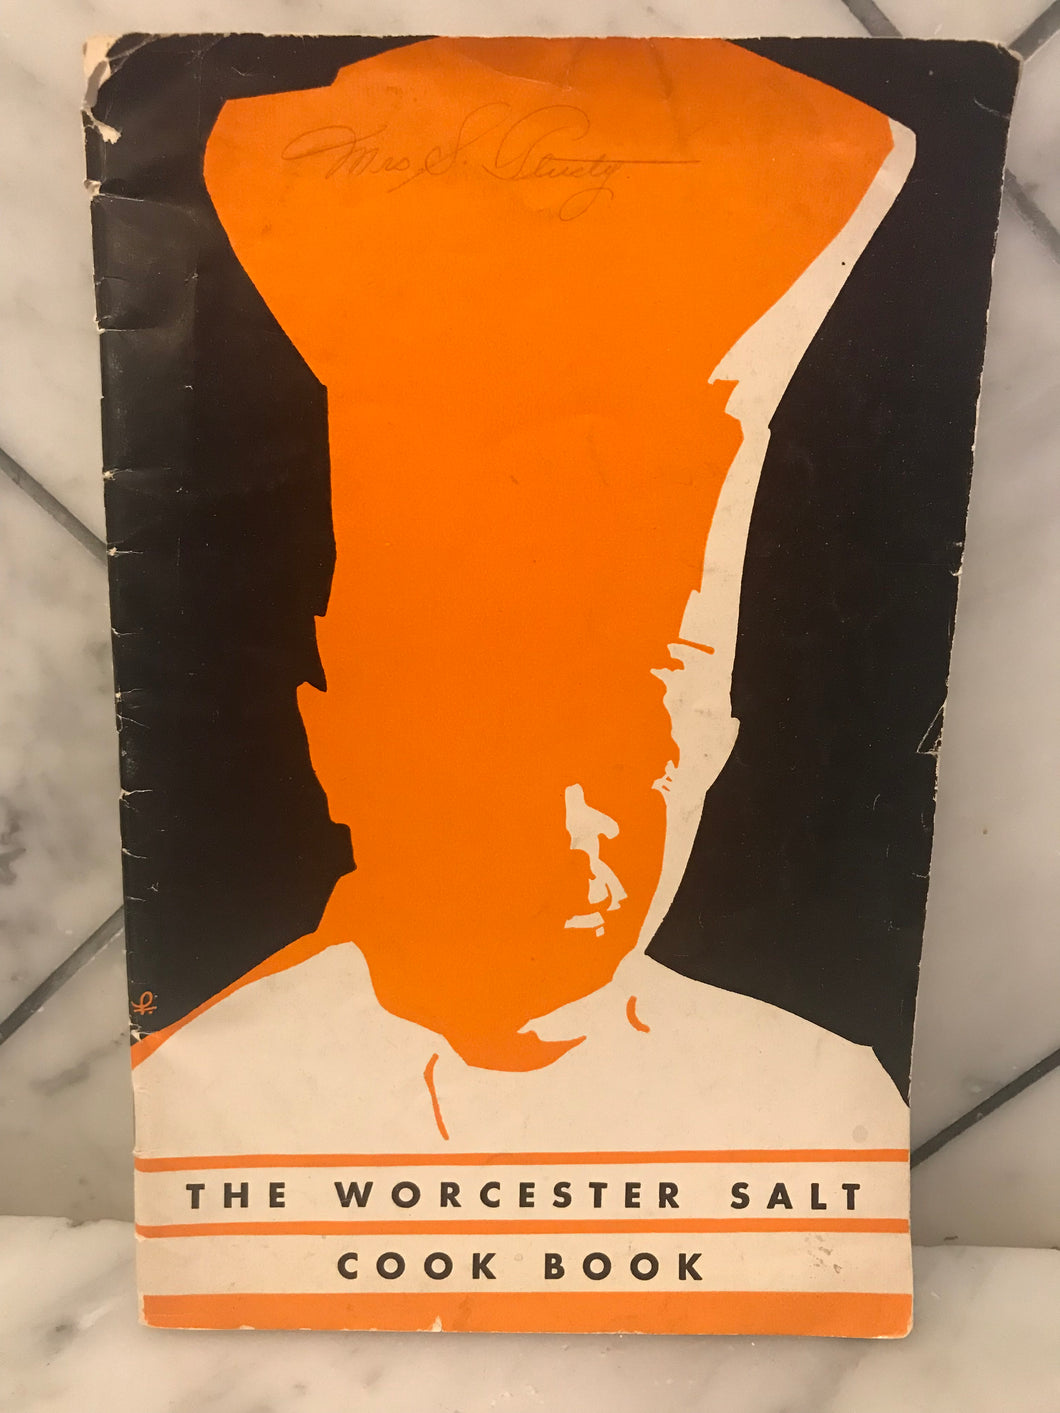 The Worcester Salt Cook Book